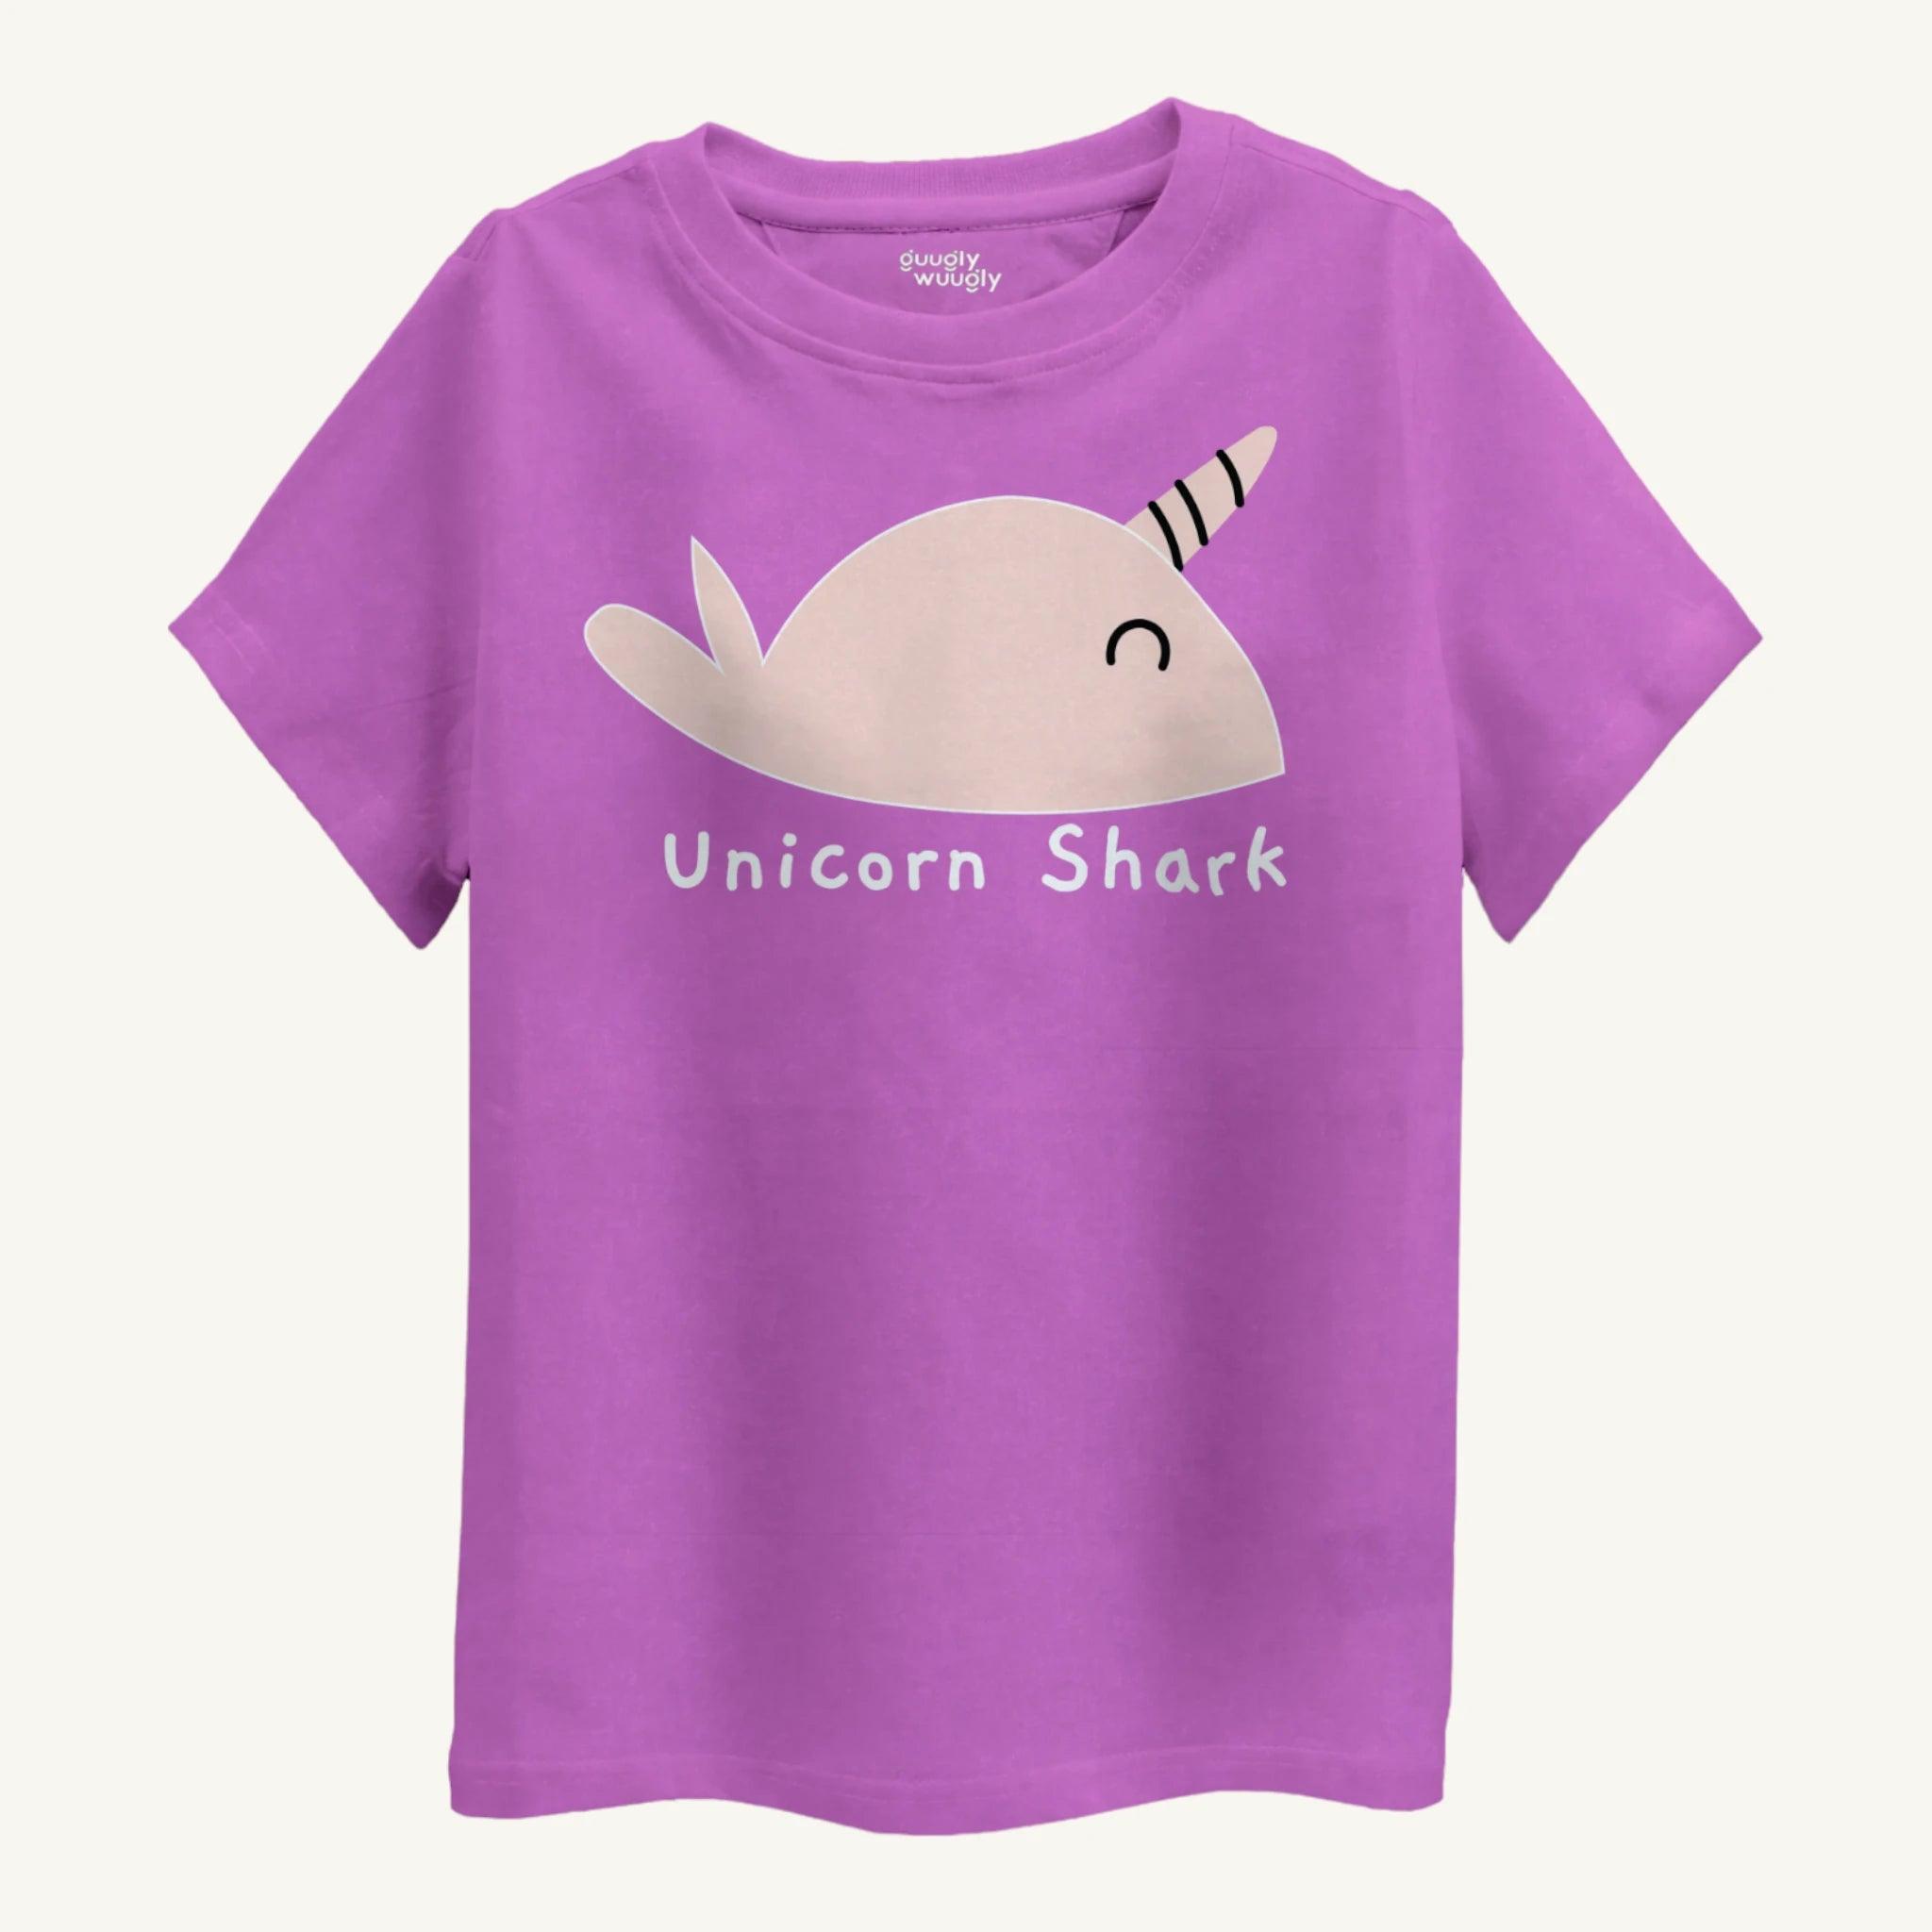 Girls Unicorn Shark T-shirt - Guugly Wuugly